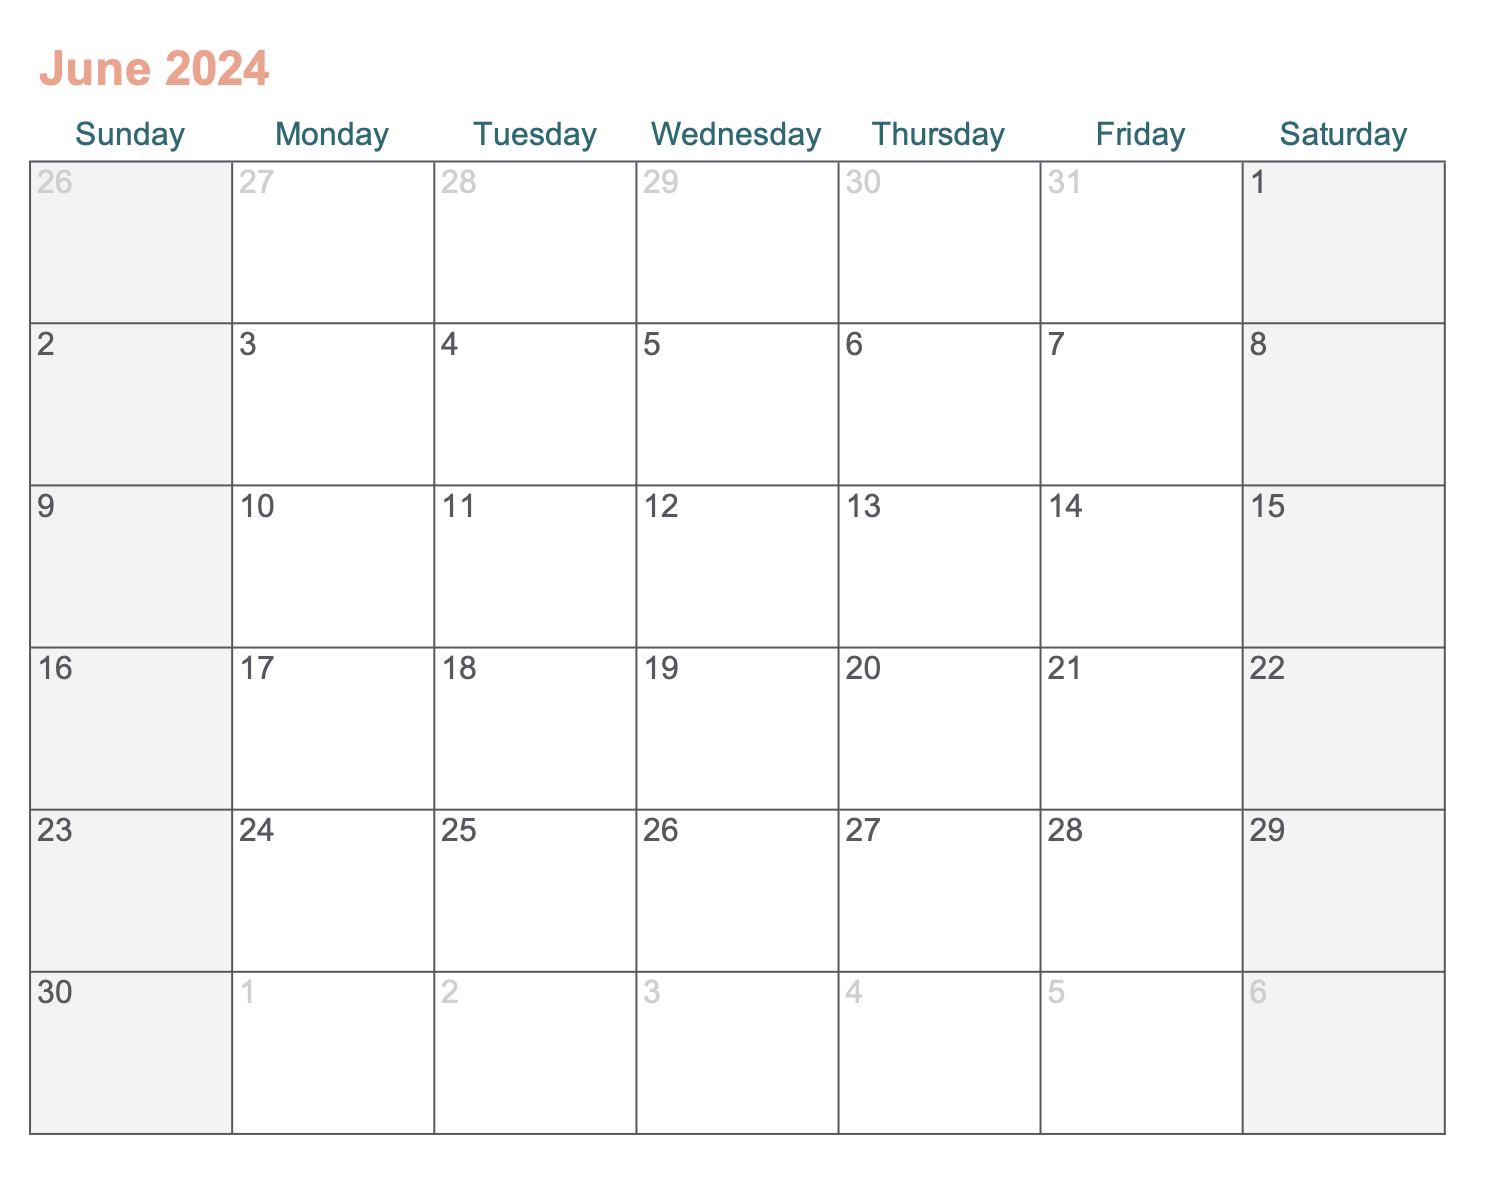 June 2024 Printable Calendar With Excel - Agendrix throughout June 2024 Calendar Excel